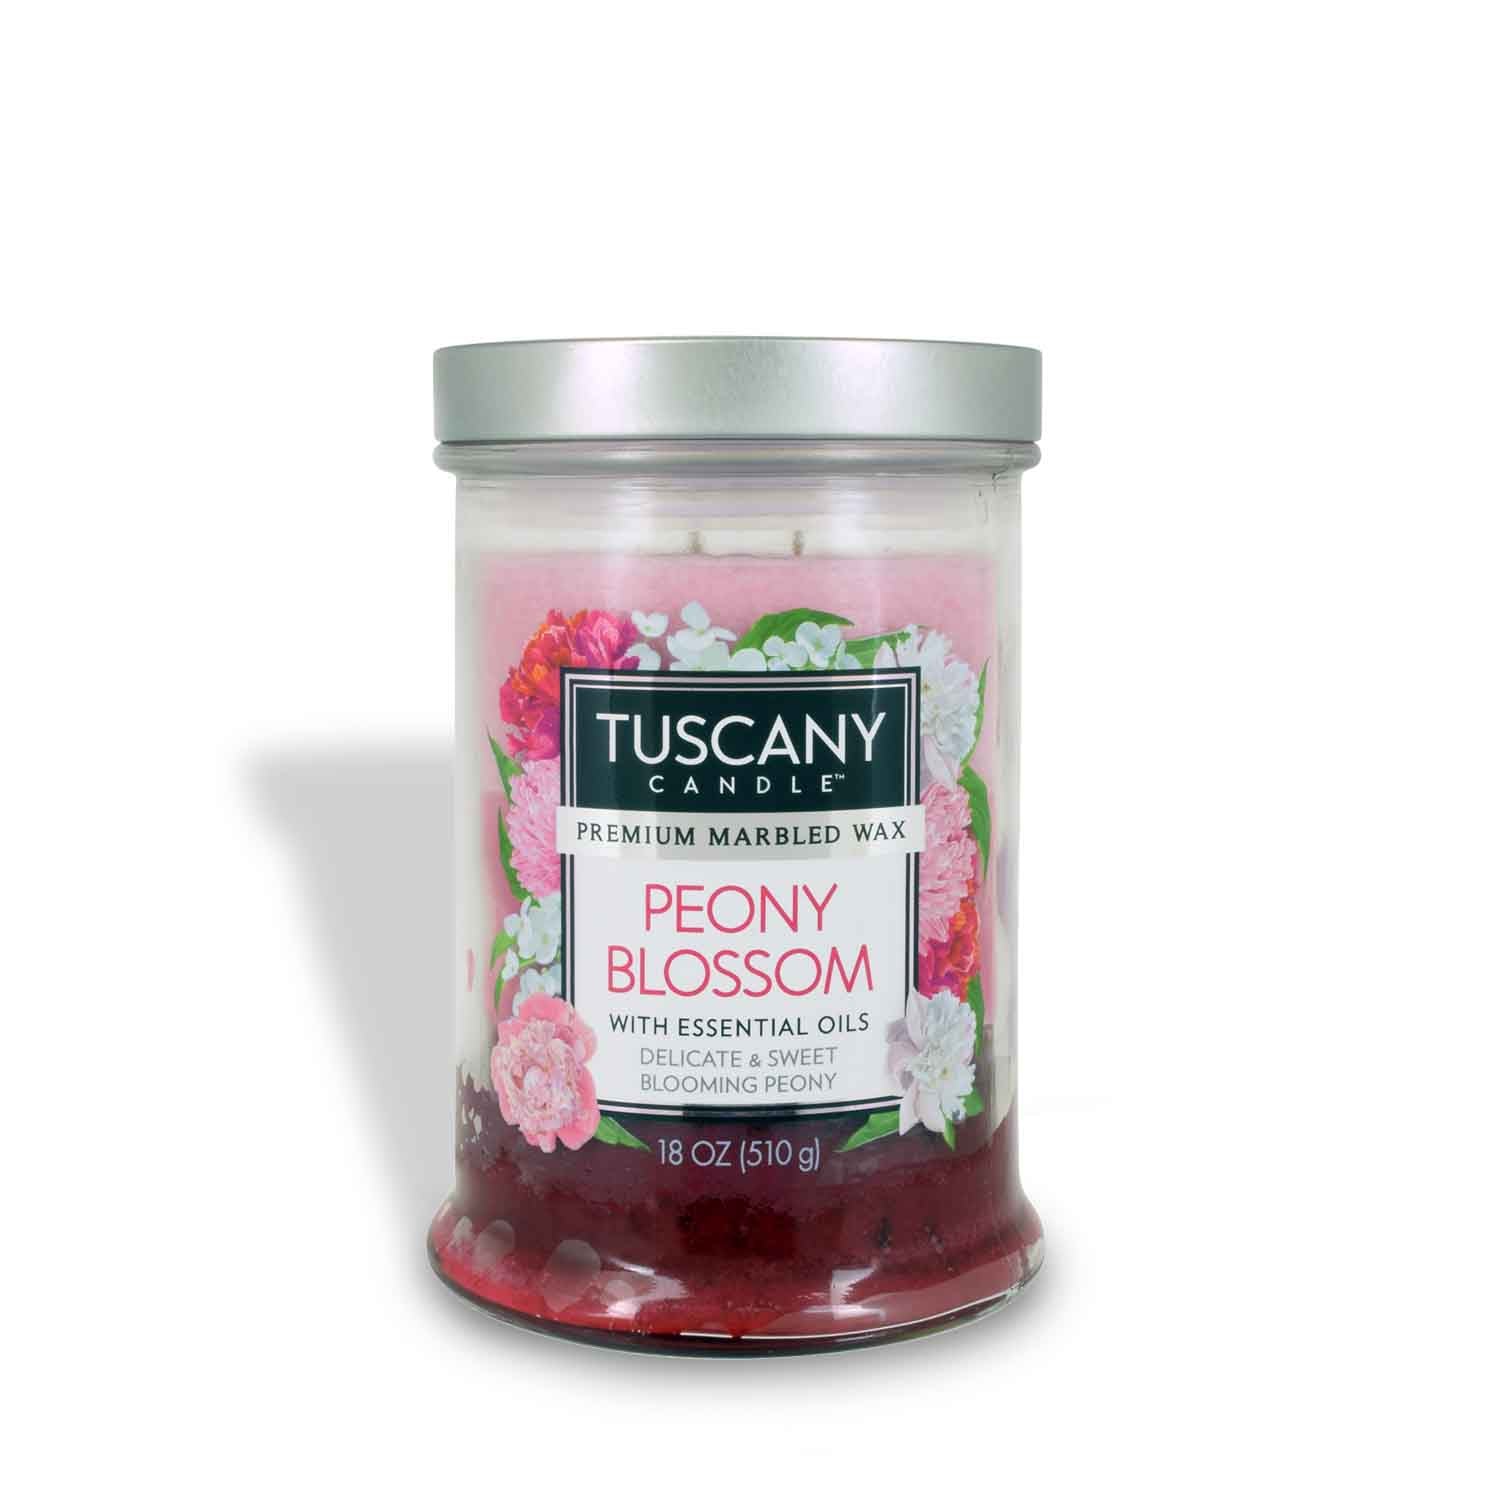 Tuscany Candle Candle, Peony Blossom - 1 candle, 18 oz